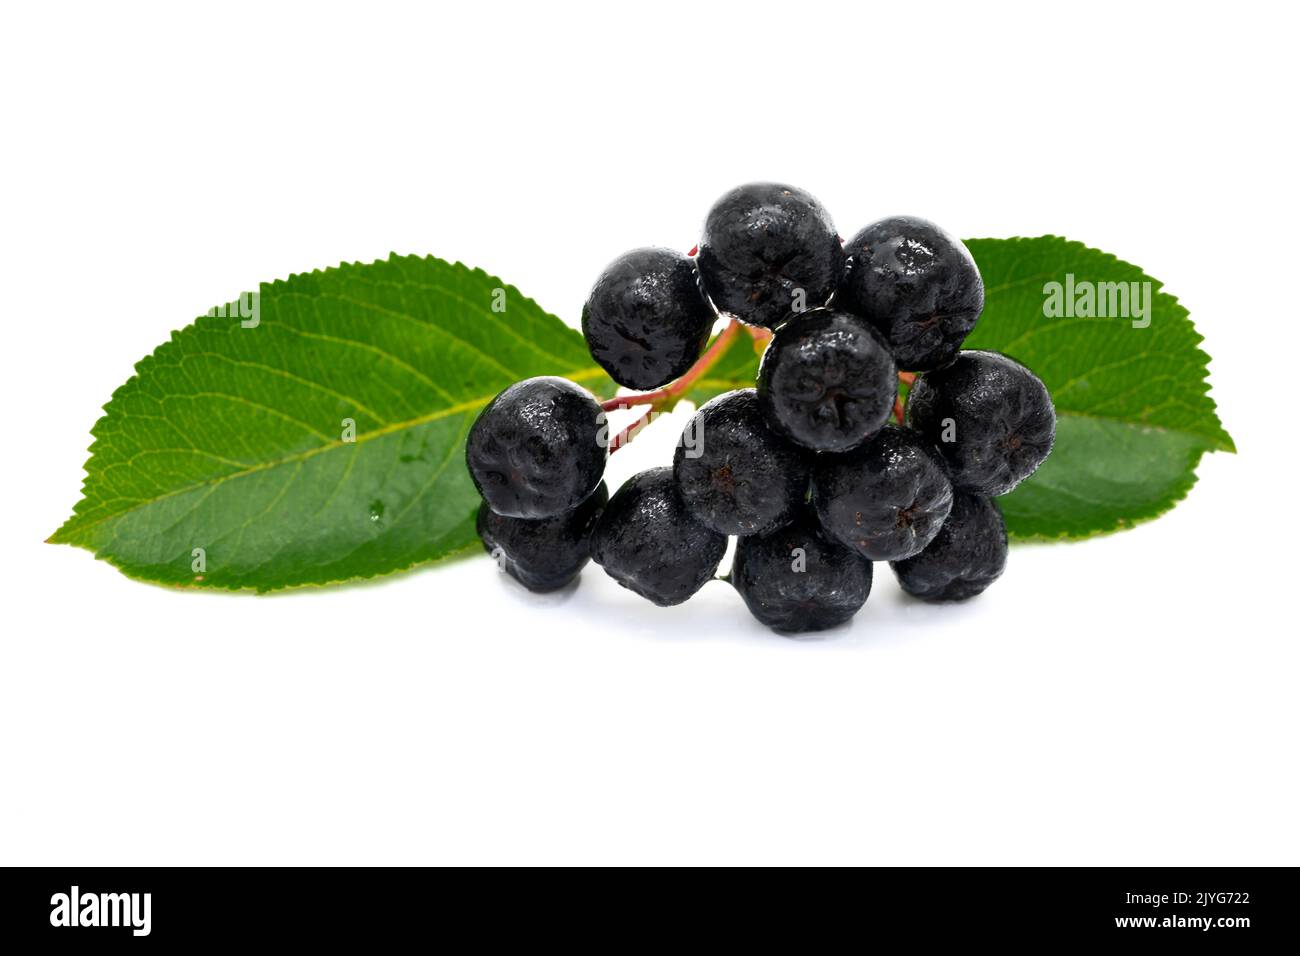 Aronia berry isolated on white background Stock Photo